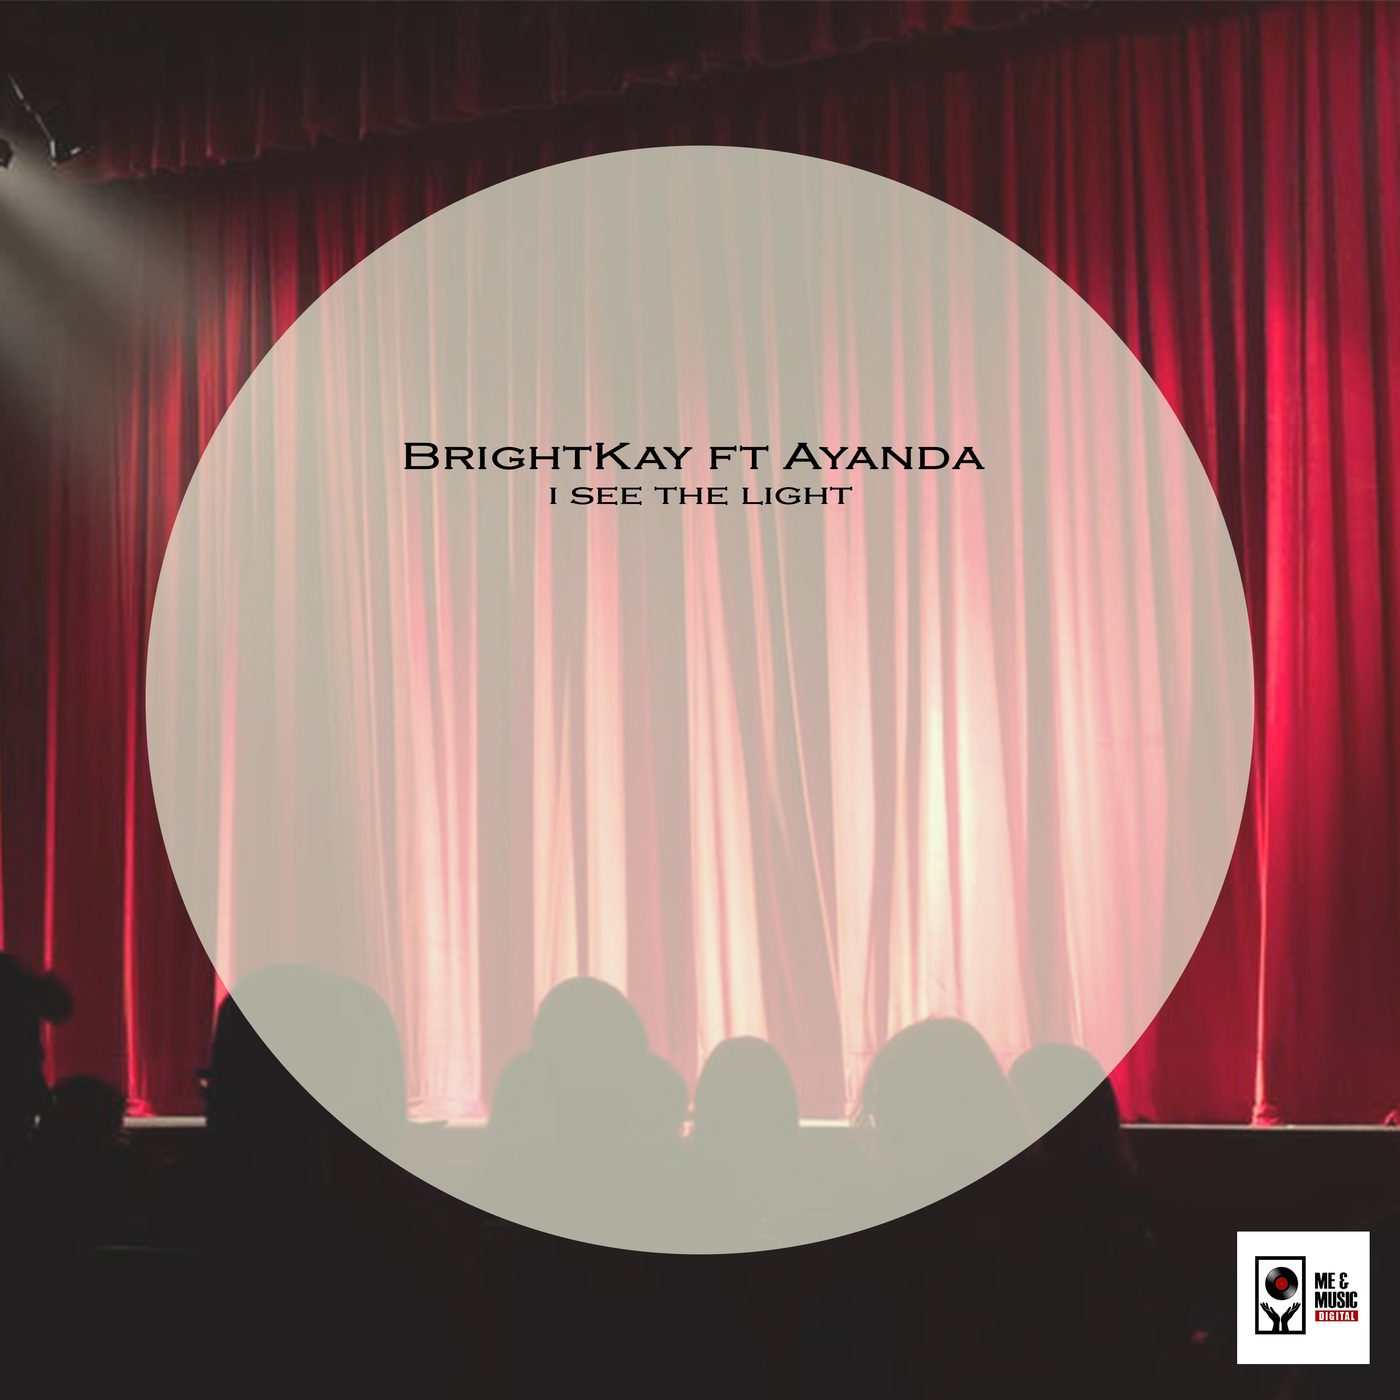 BrightKay ft Ayanda - I See the Light / Me and Music Digital Distributors